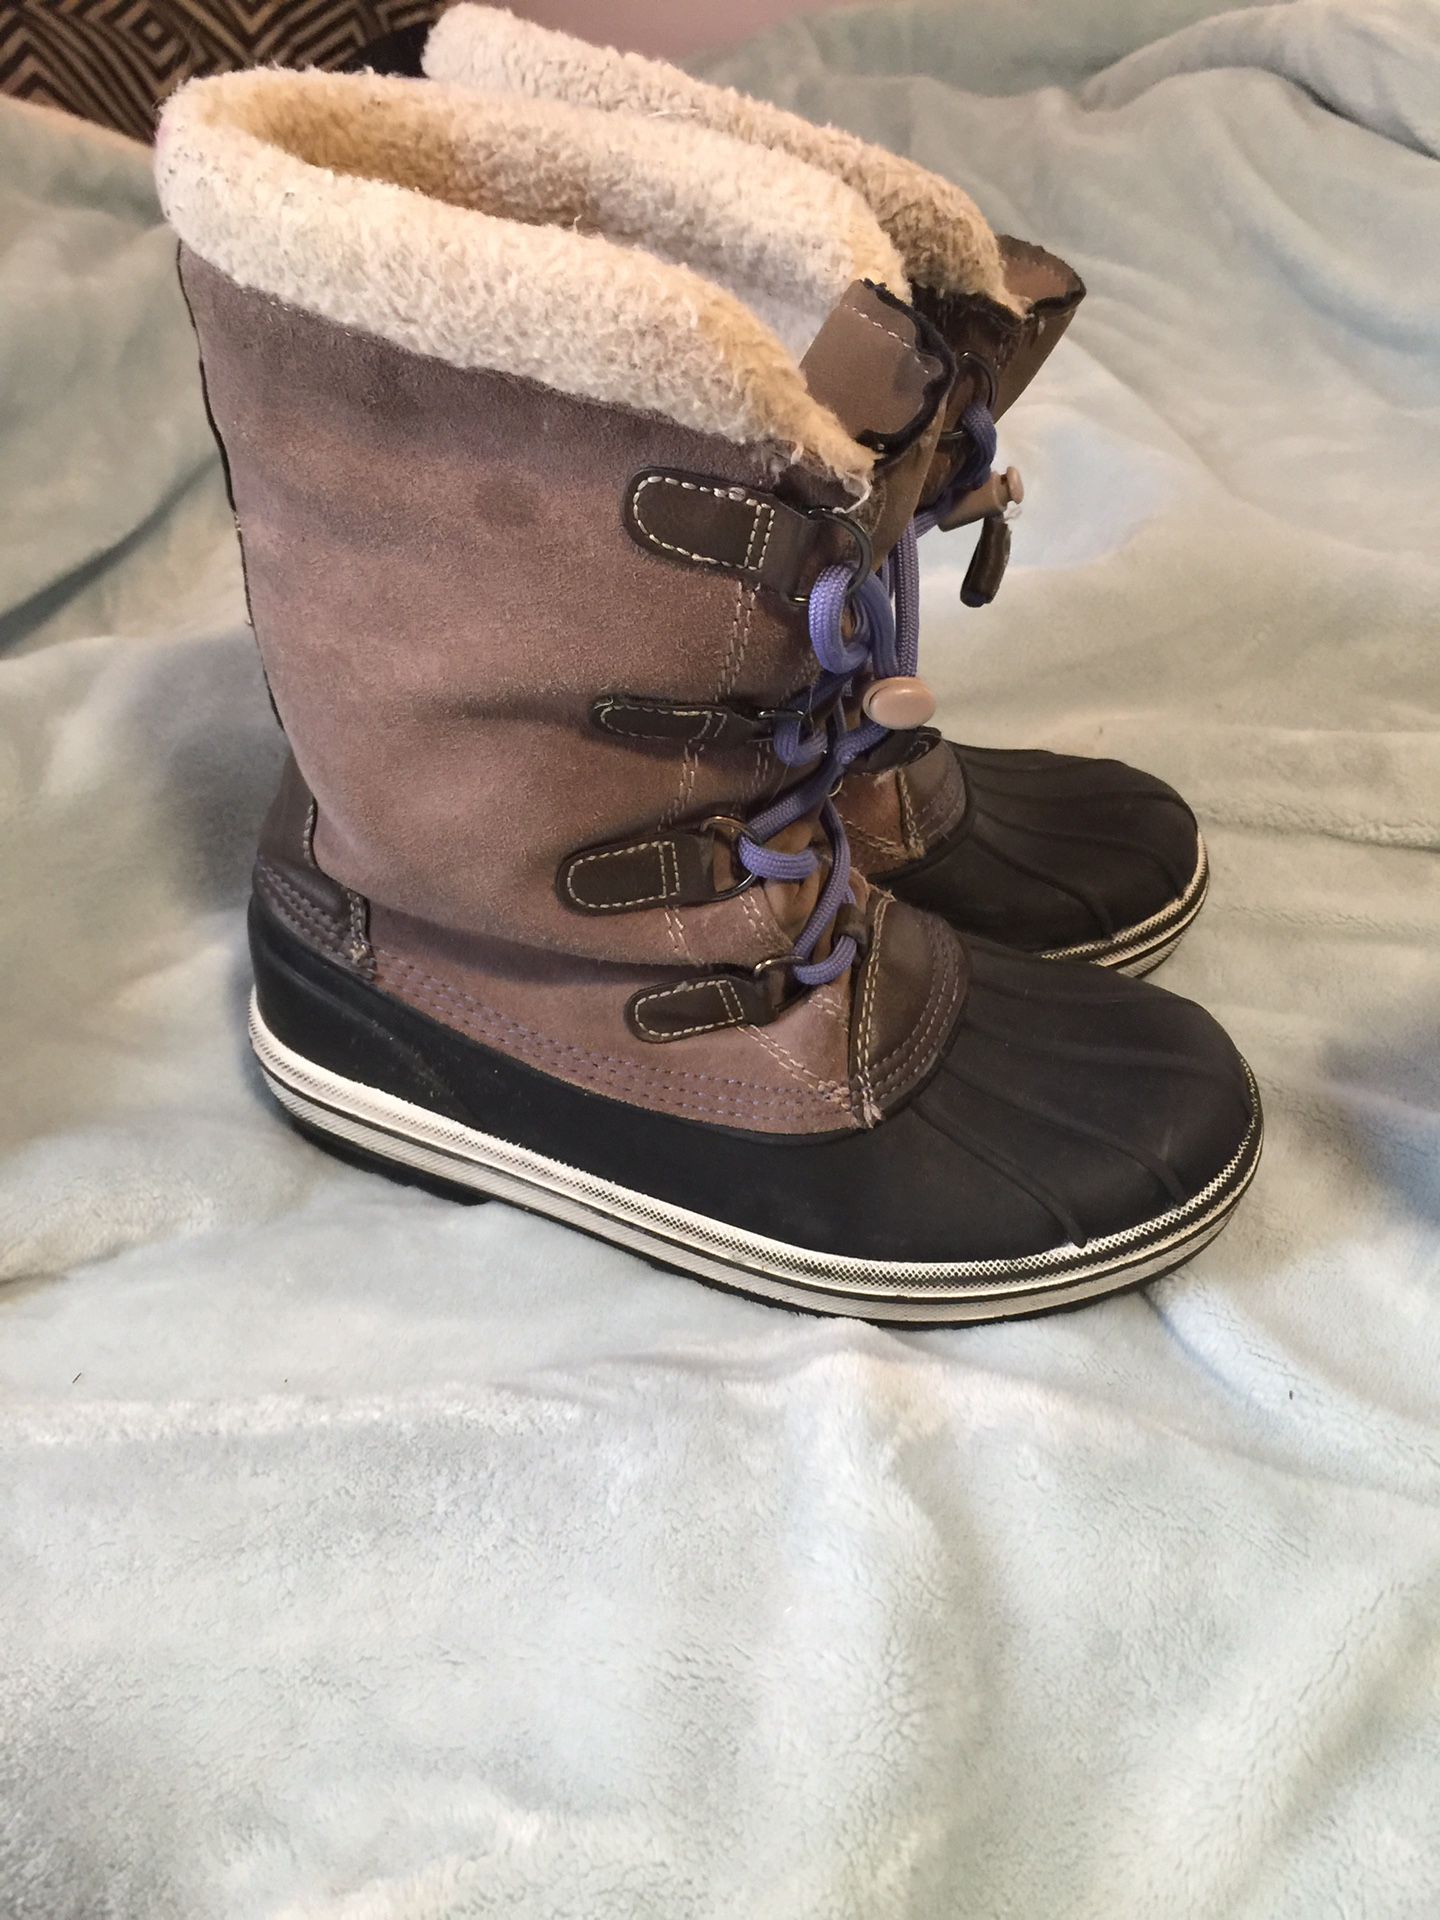 Girls winter snow boots